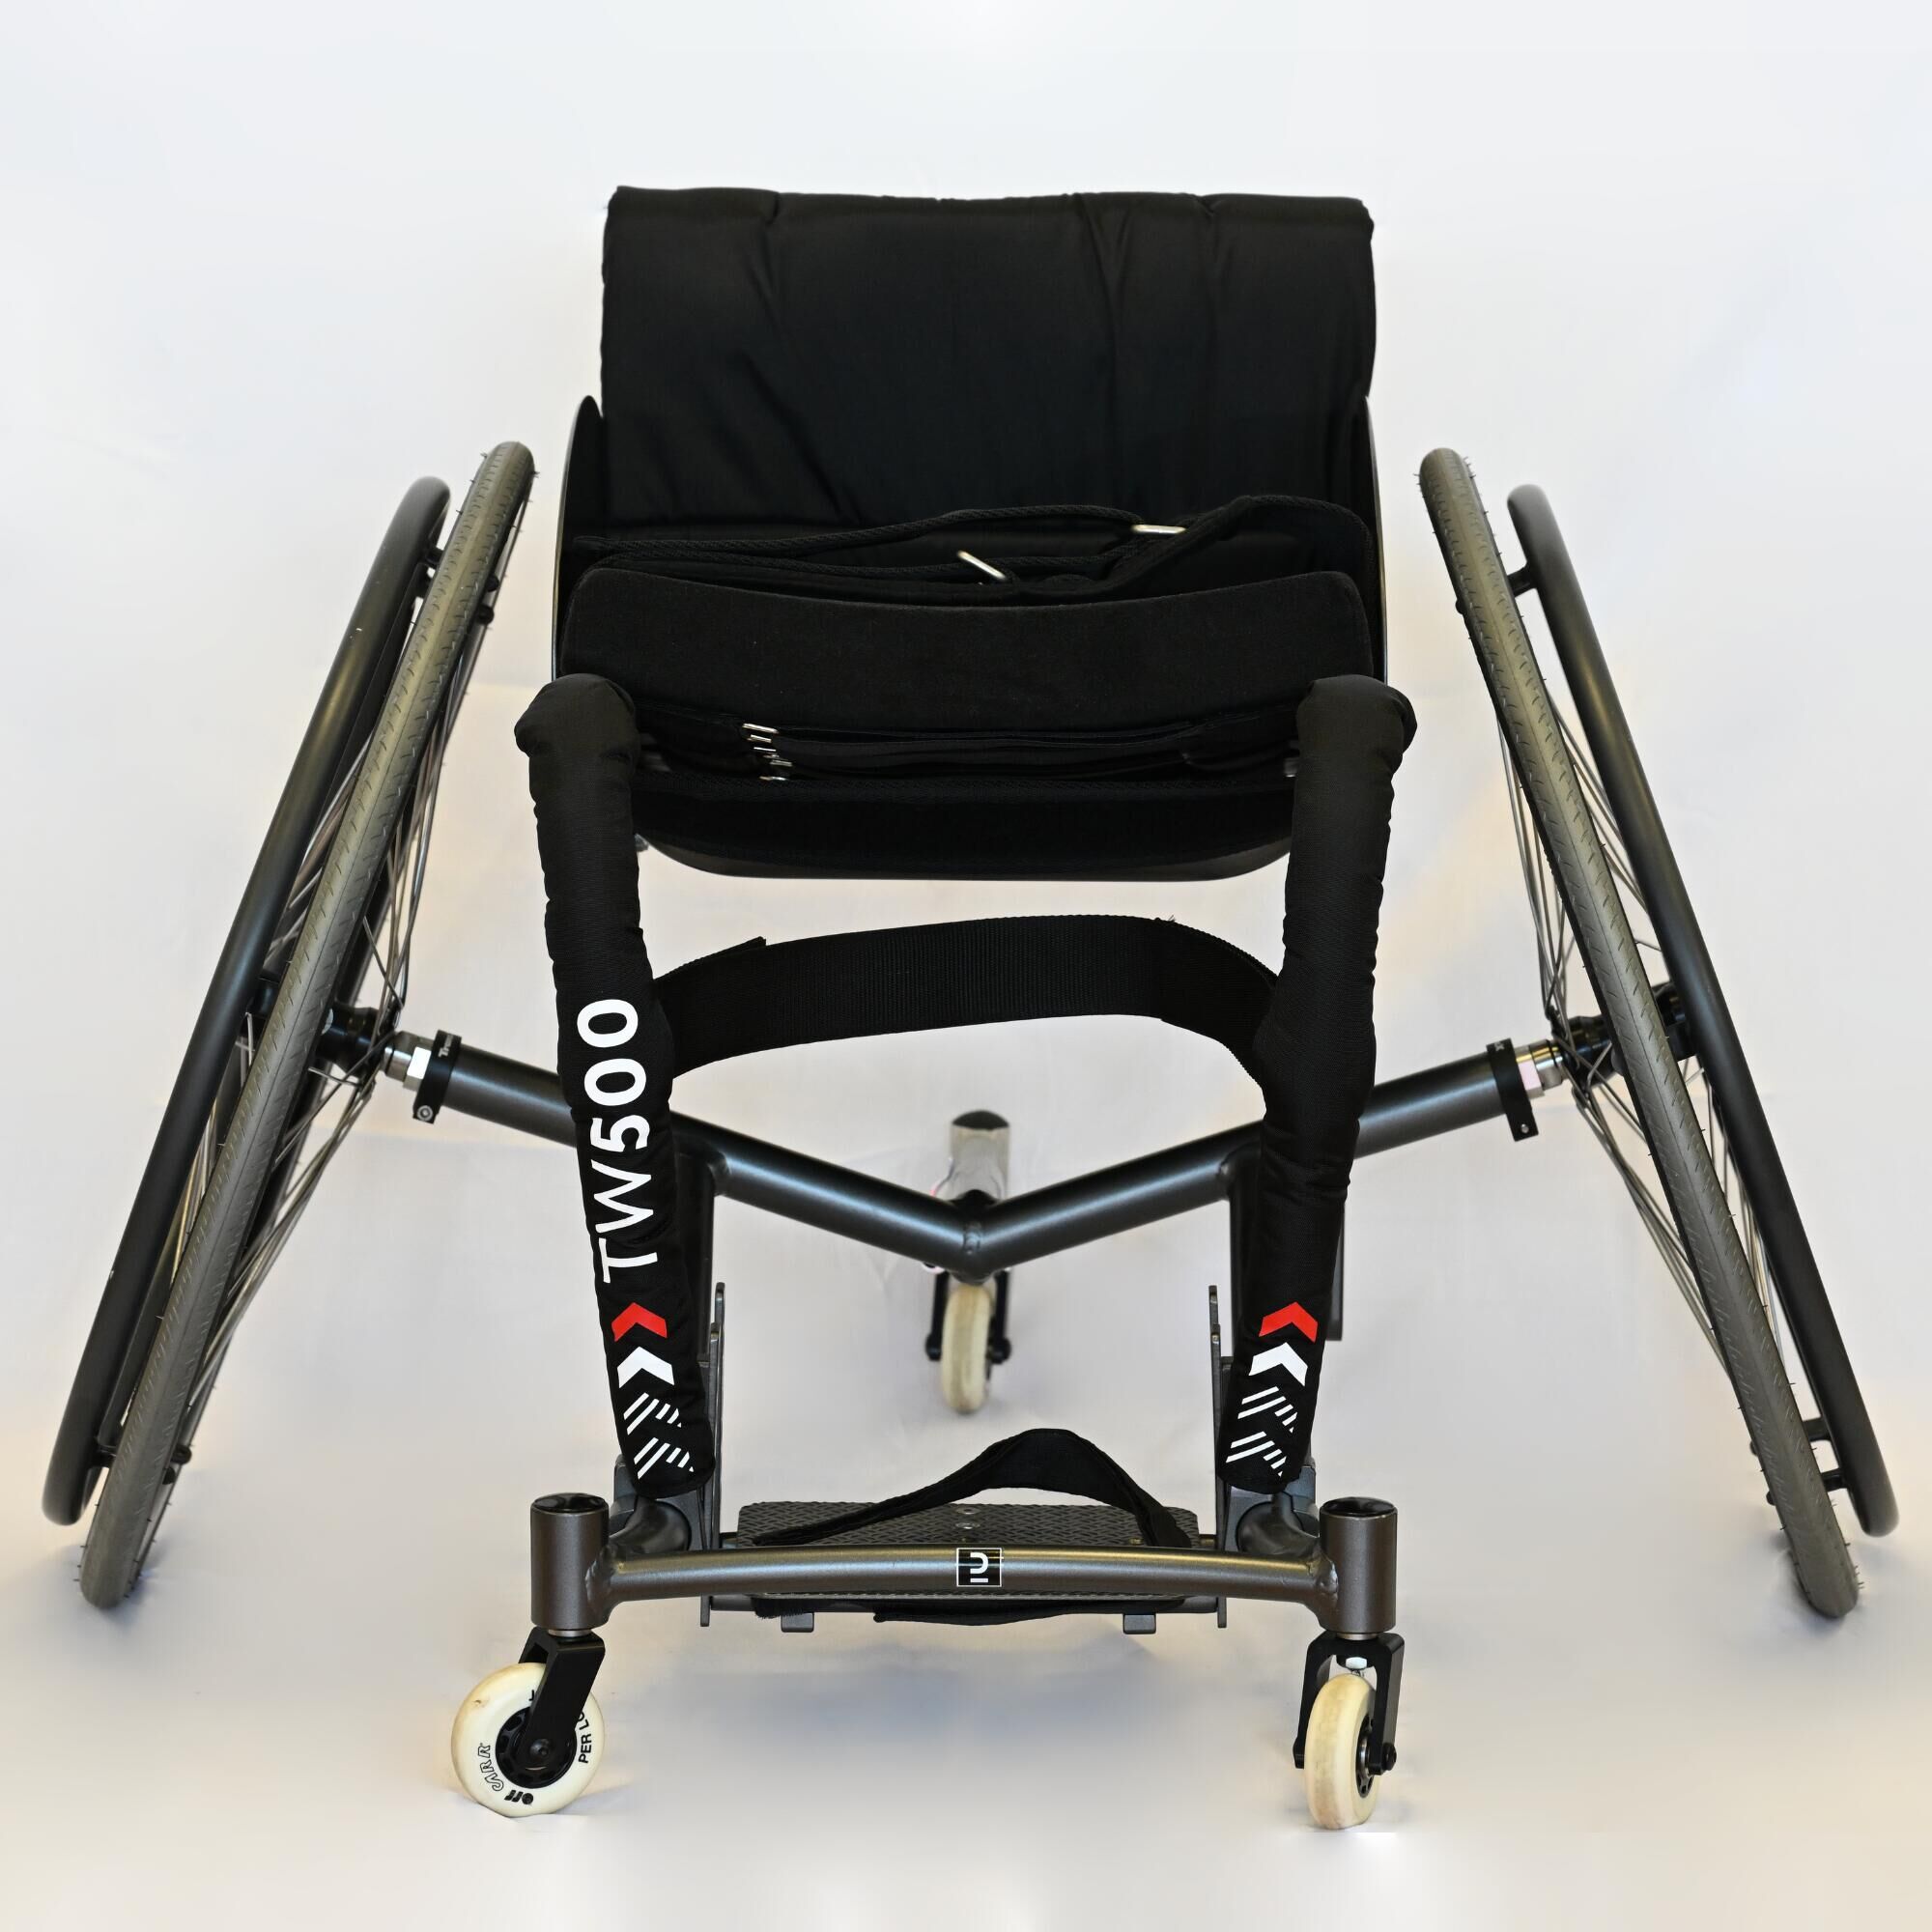 DECATHLON Tennis and Racket Sports Adjustable Wheelchair TW500